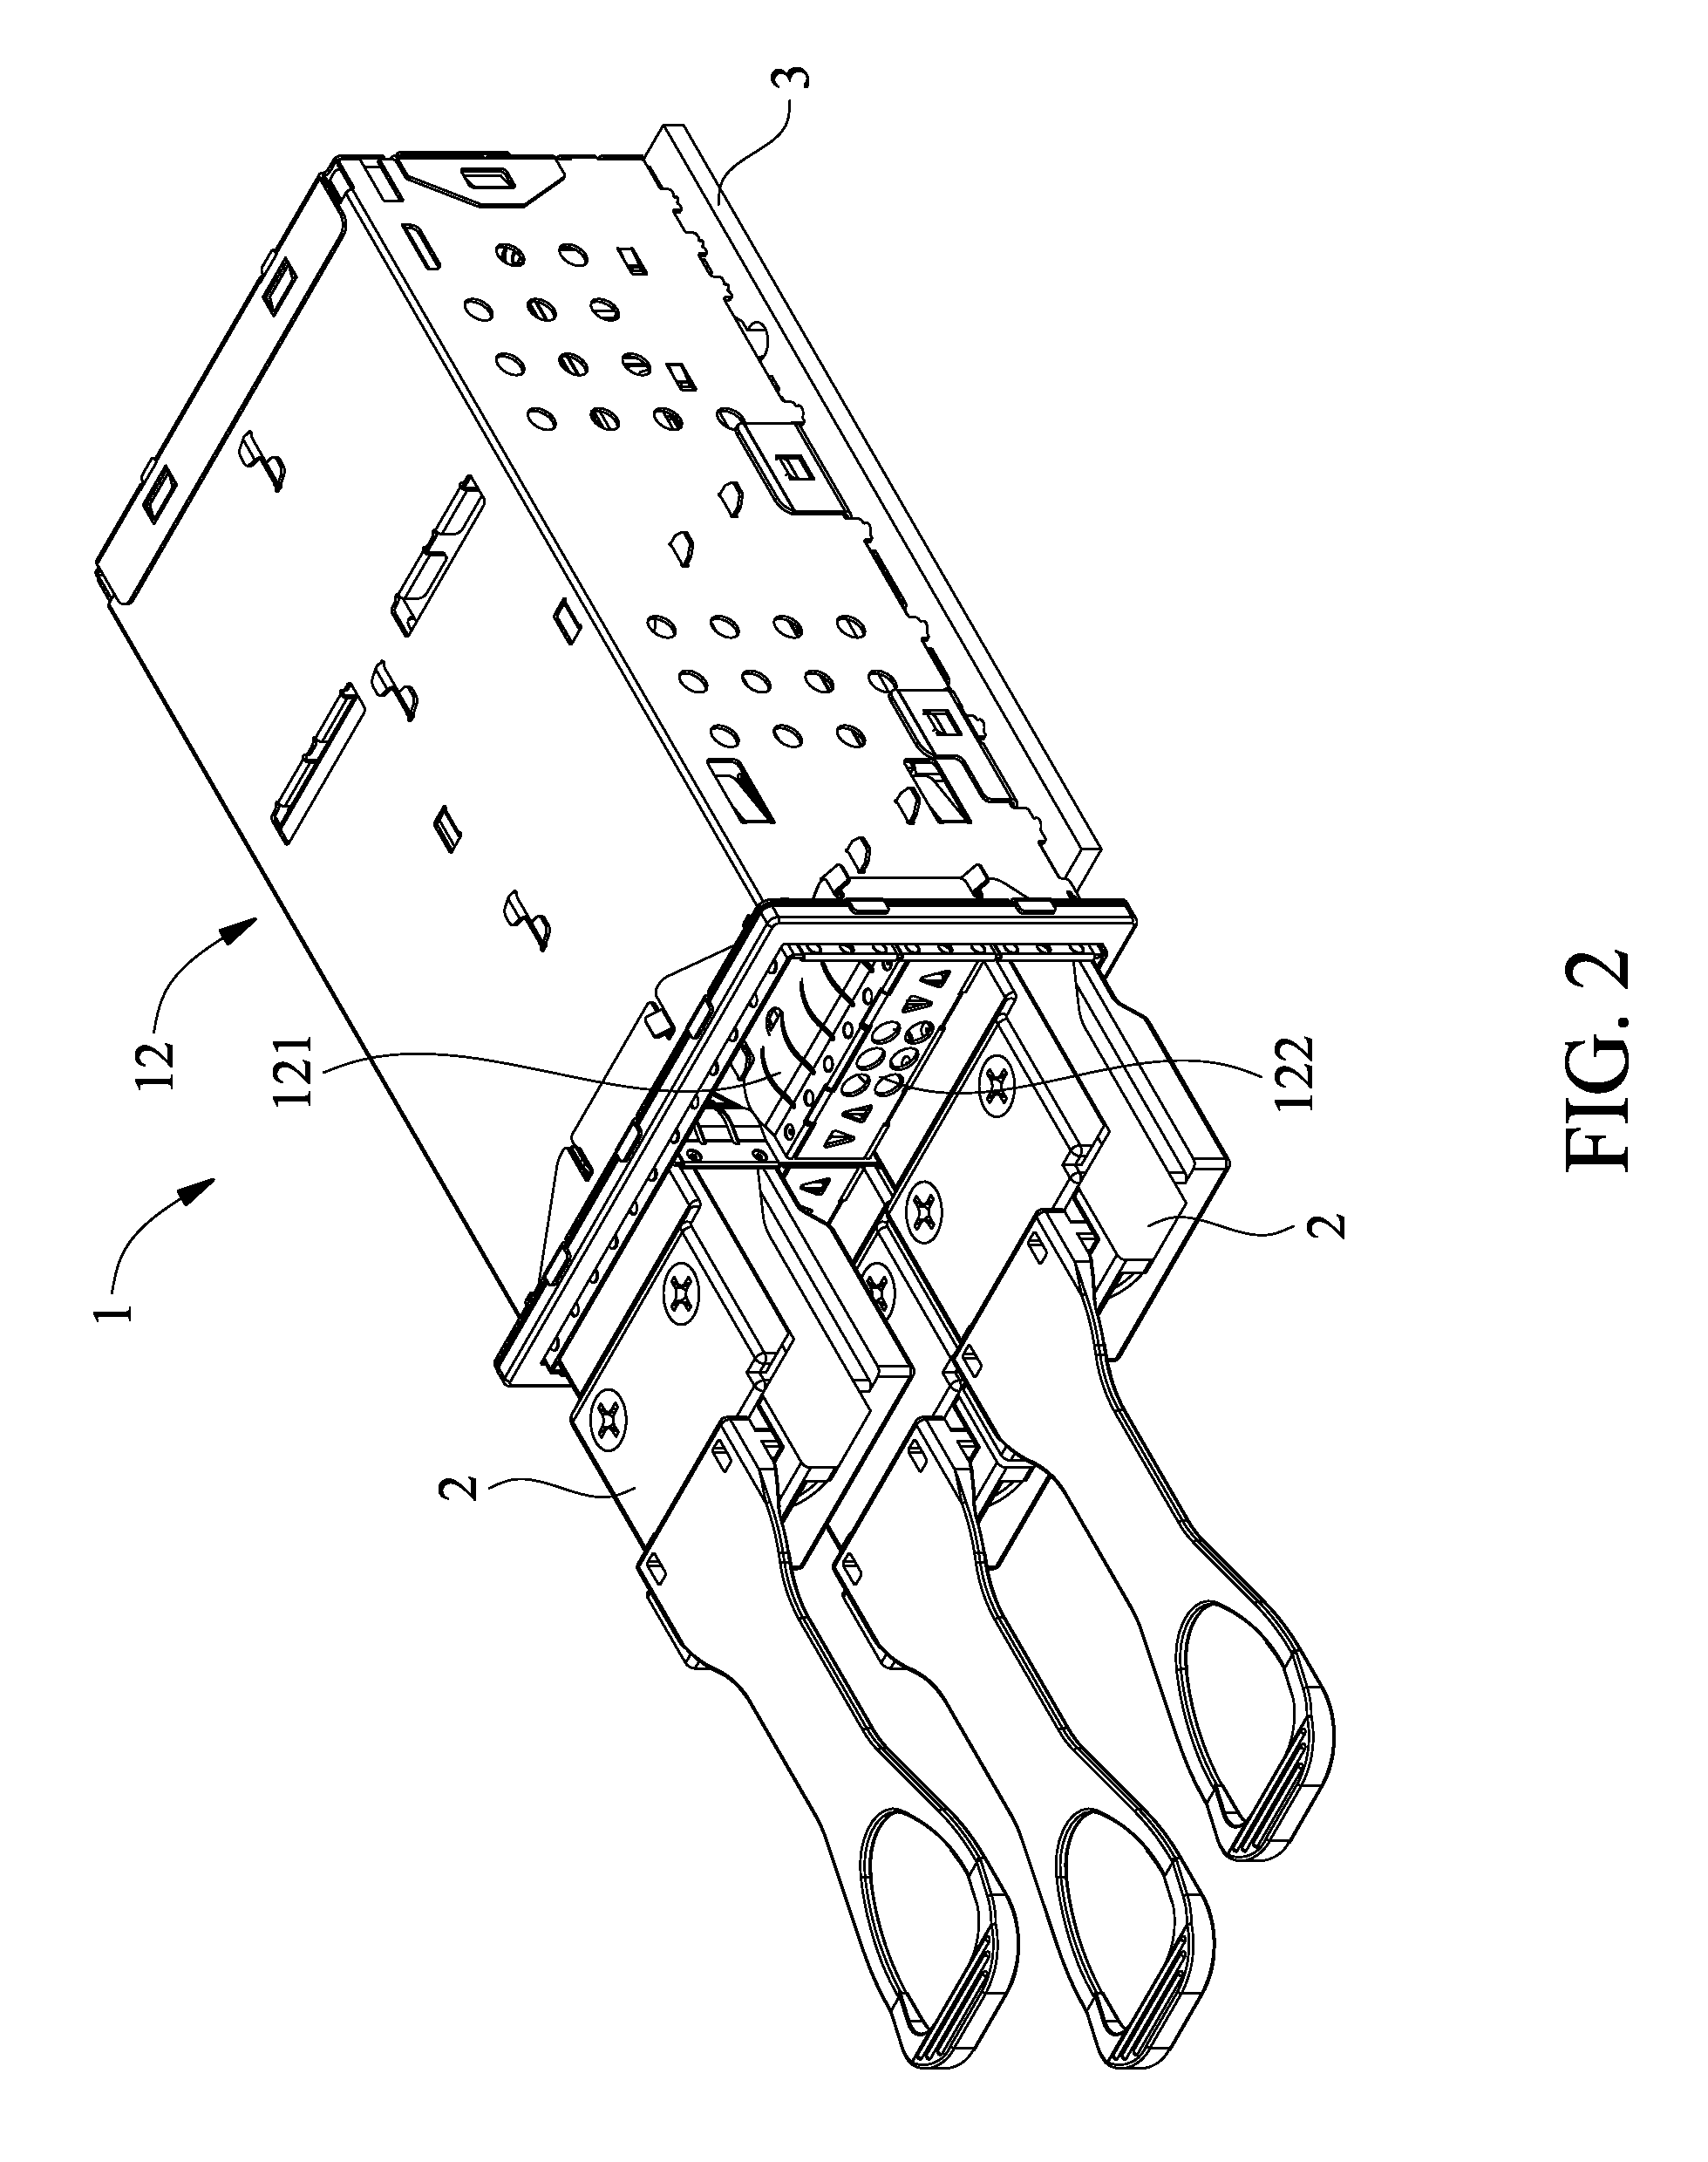 Connector module